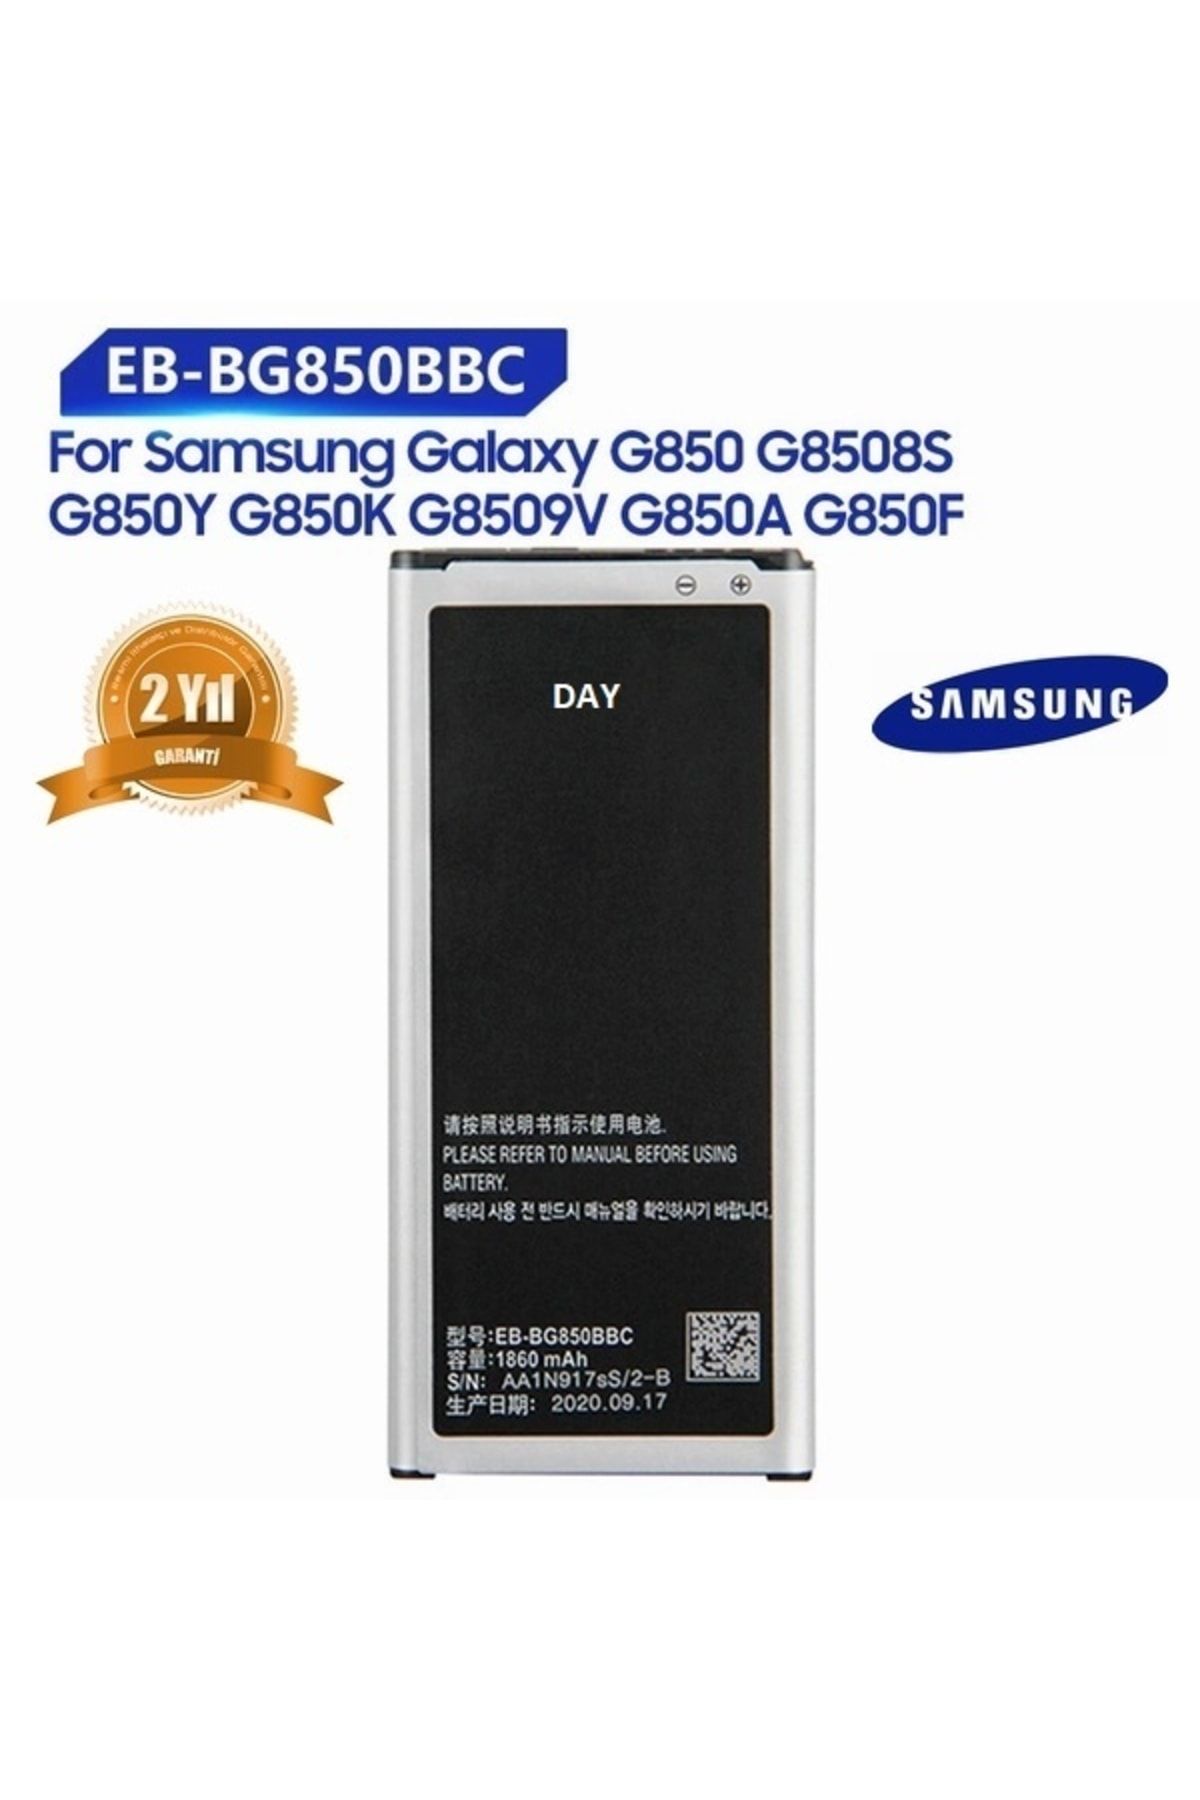 Genel Markalar Day Samsung Galaxy Alpha G8508s Eb-bg850bbc Eb-bg850bbu Eb-bg850bbe 1860mah Batarya 2 Yıl Garanti